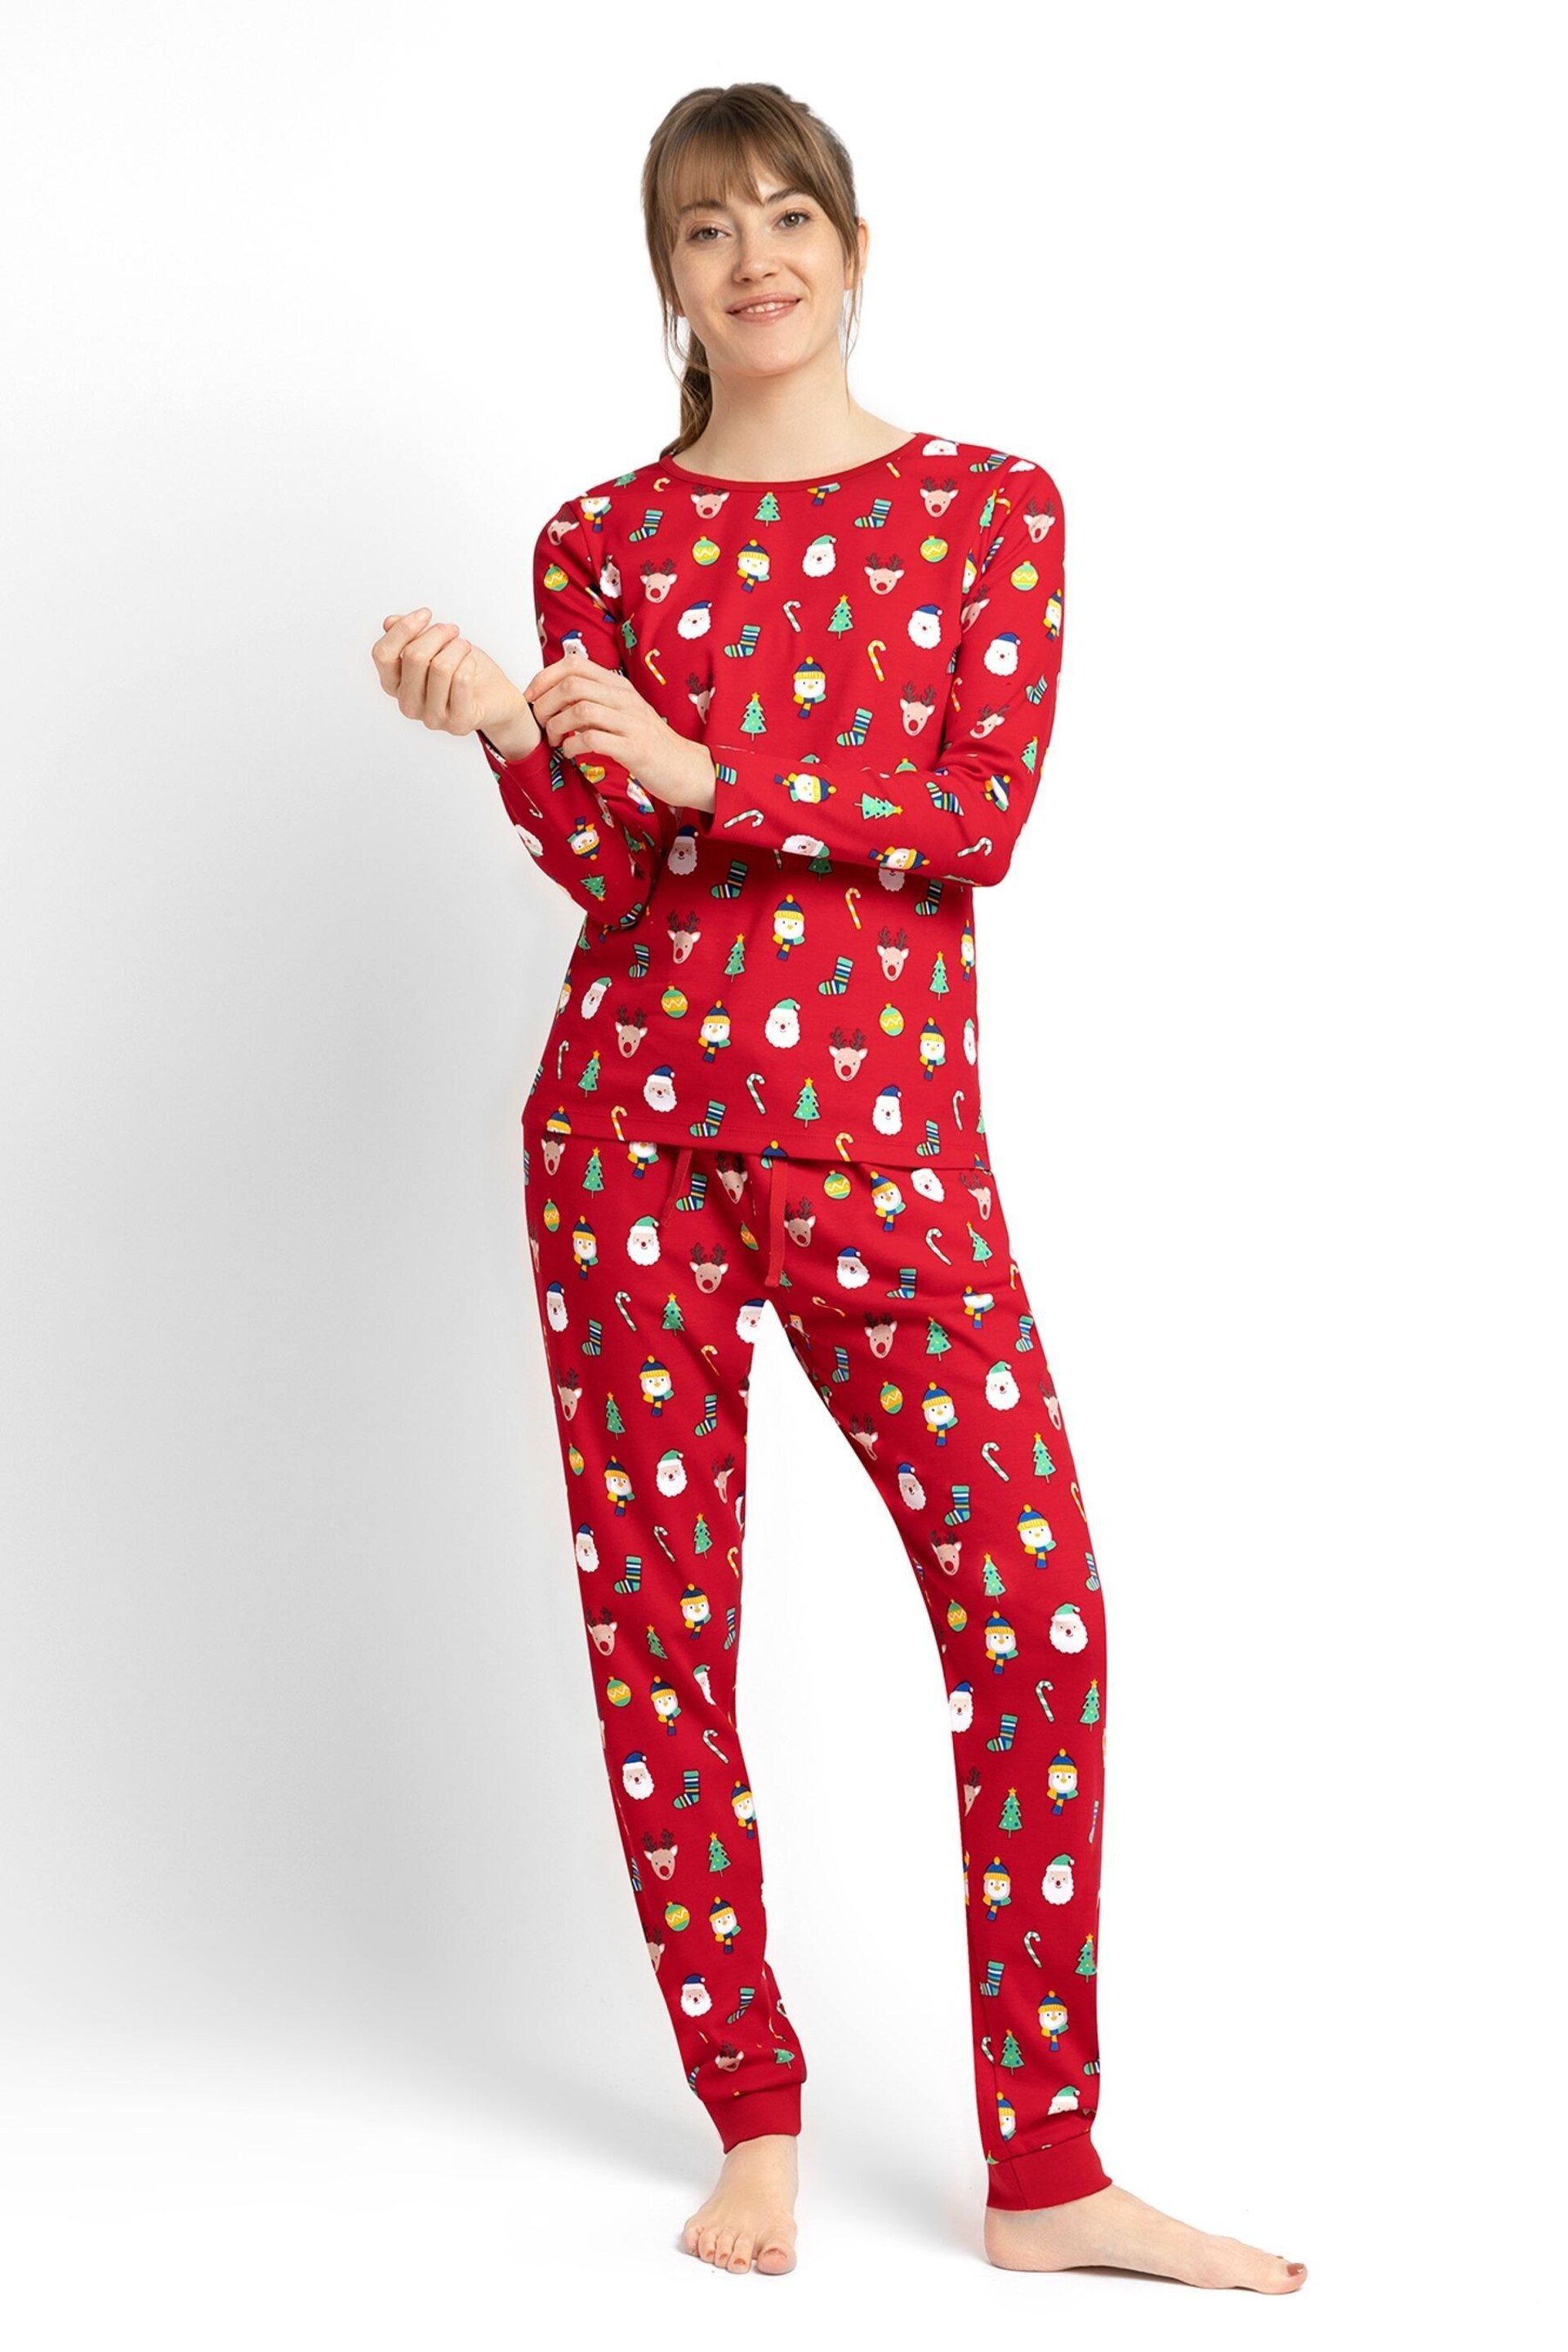 JoJo Maman Bébé Red Women's Christmas Print Pyjama Set - Image 1 of 3